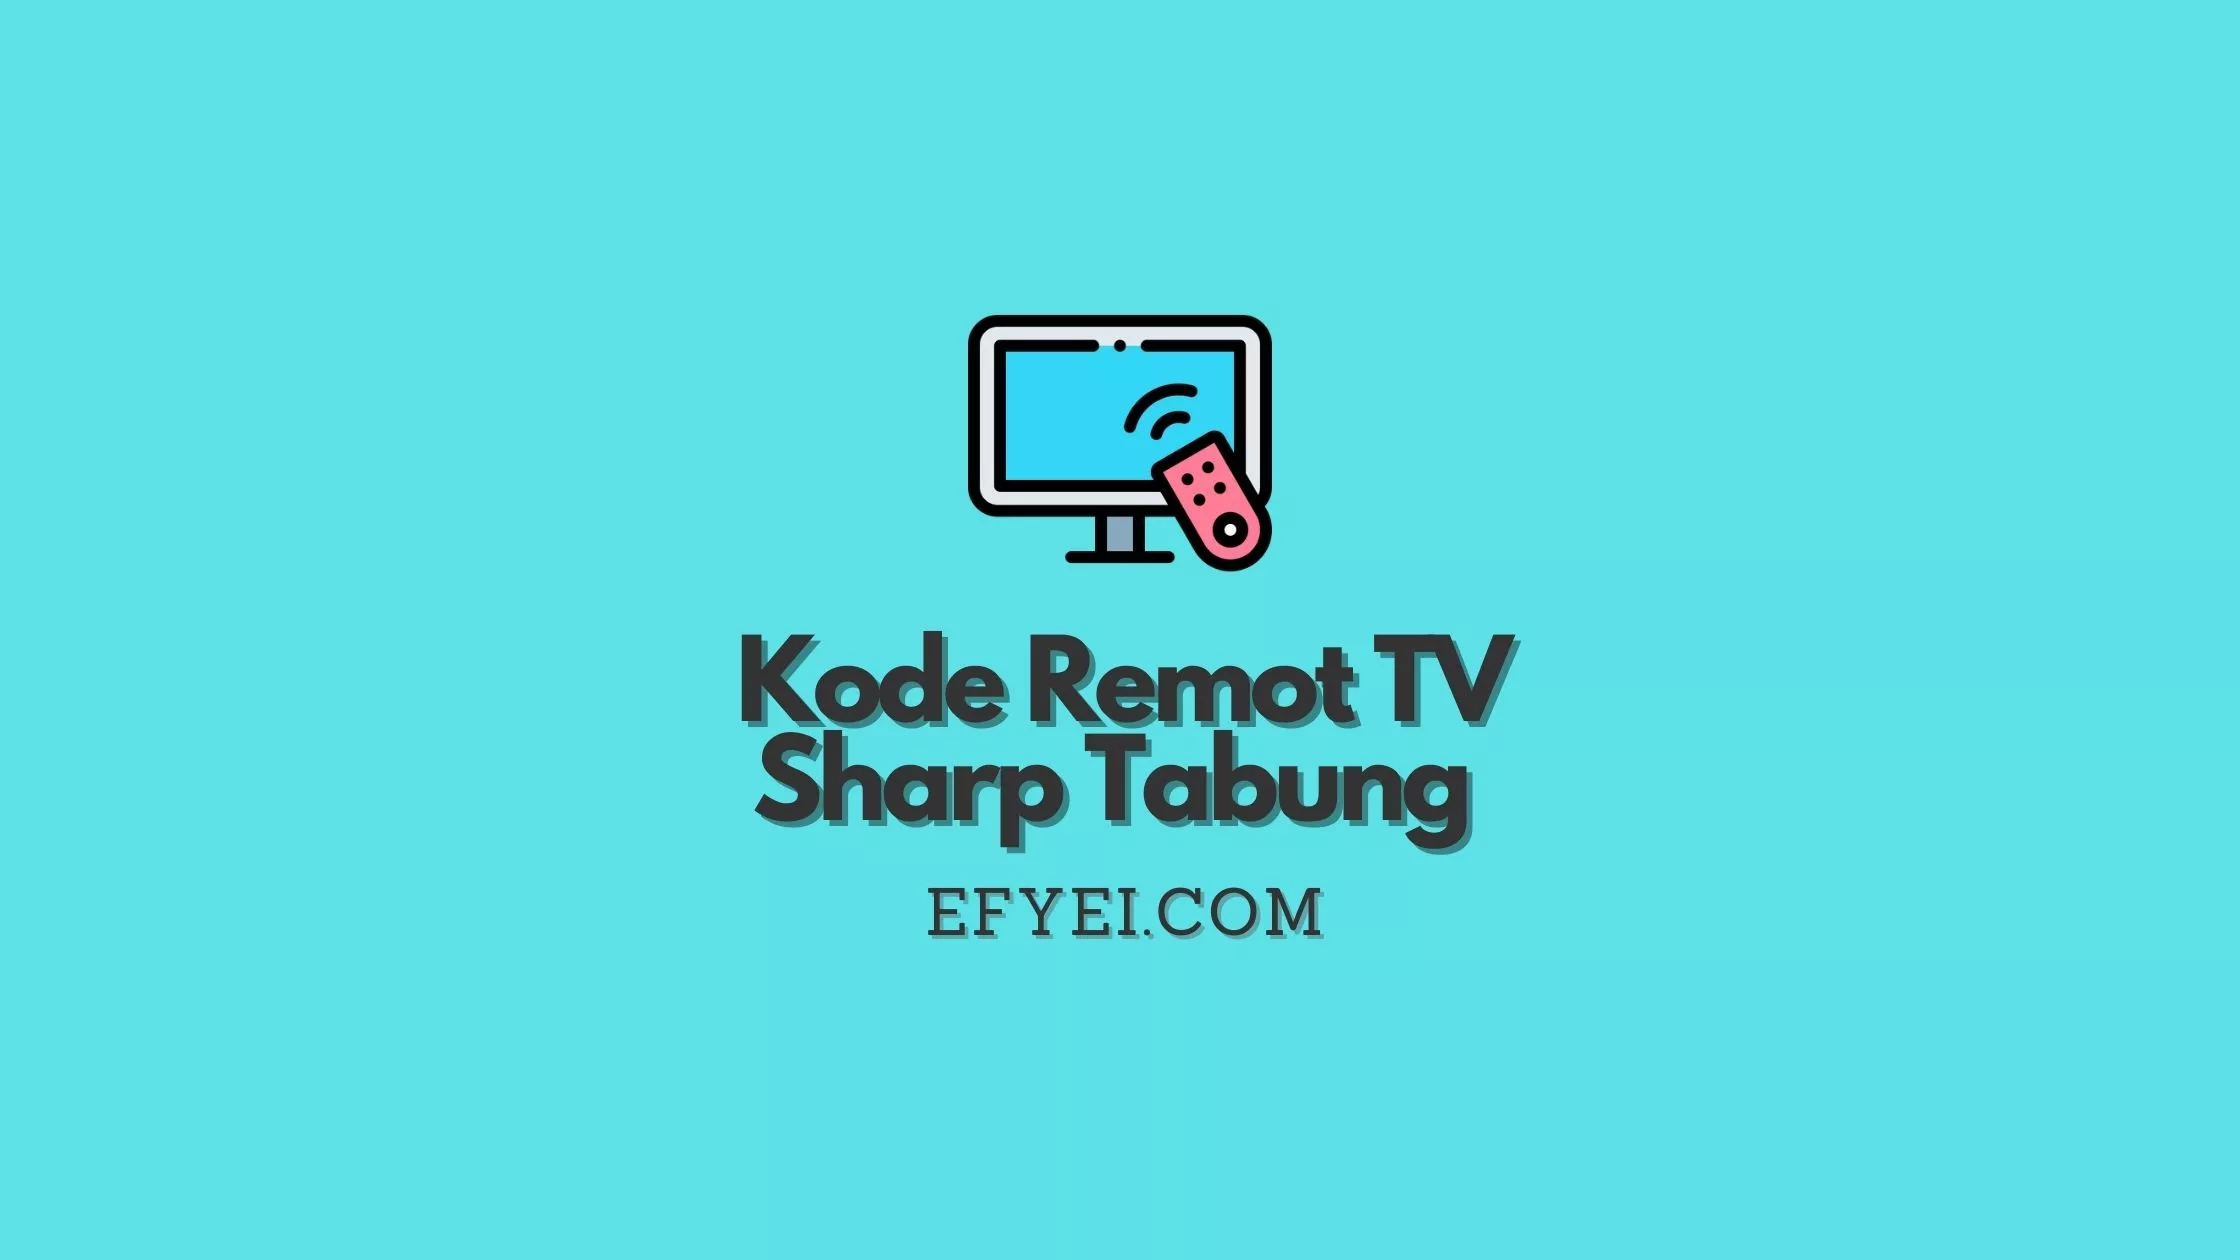 Kode Remot TV Sharp Tabung